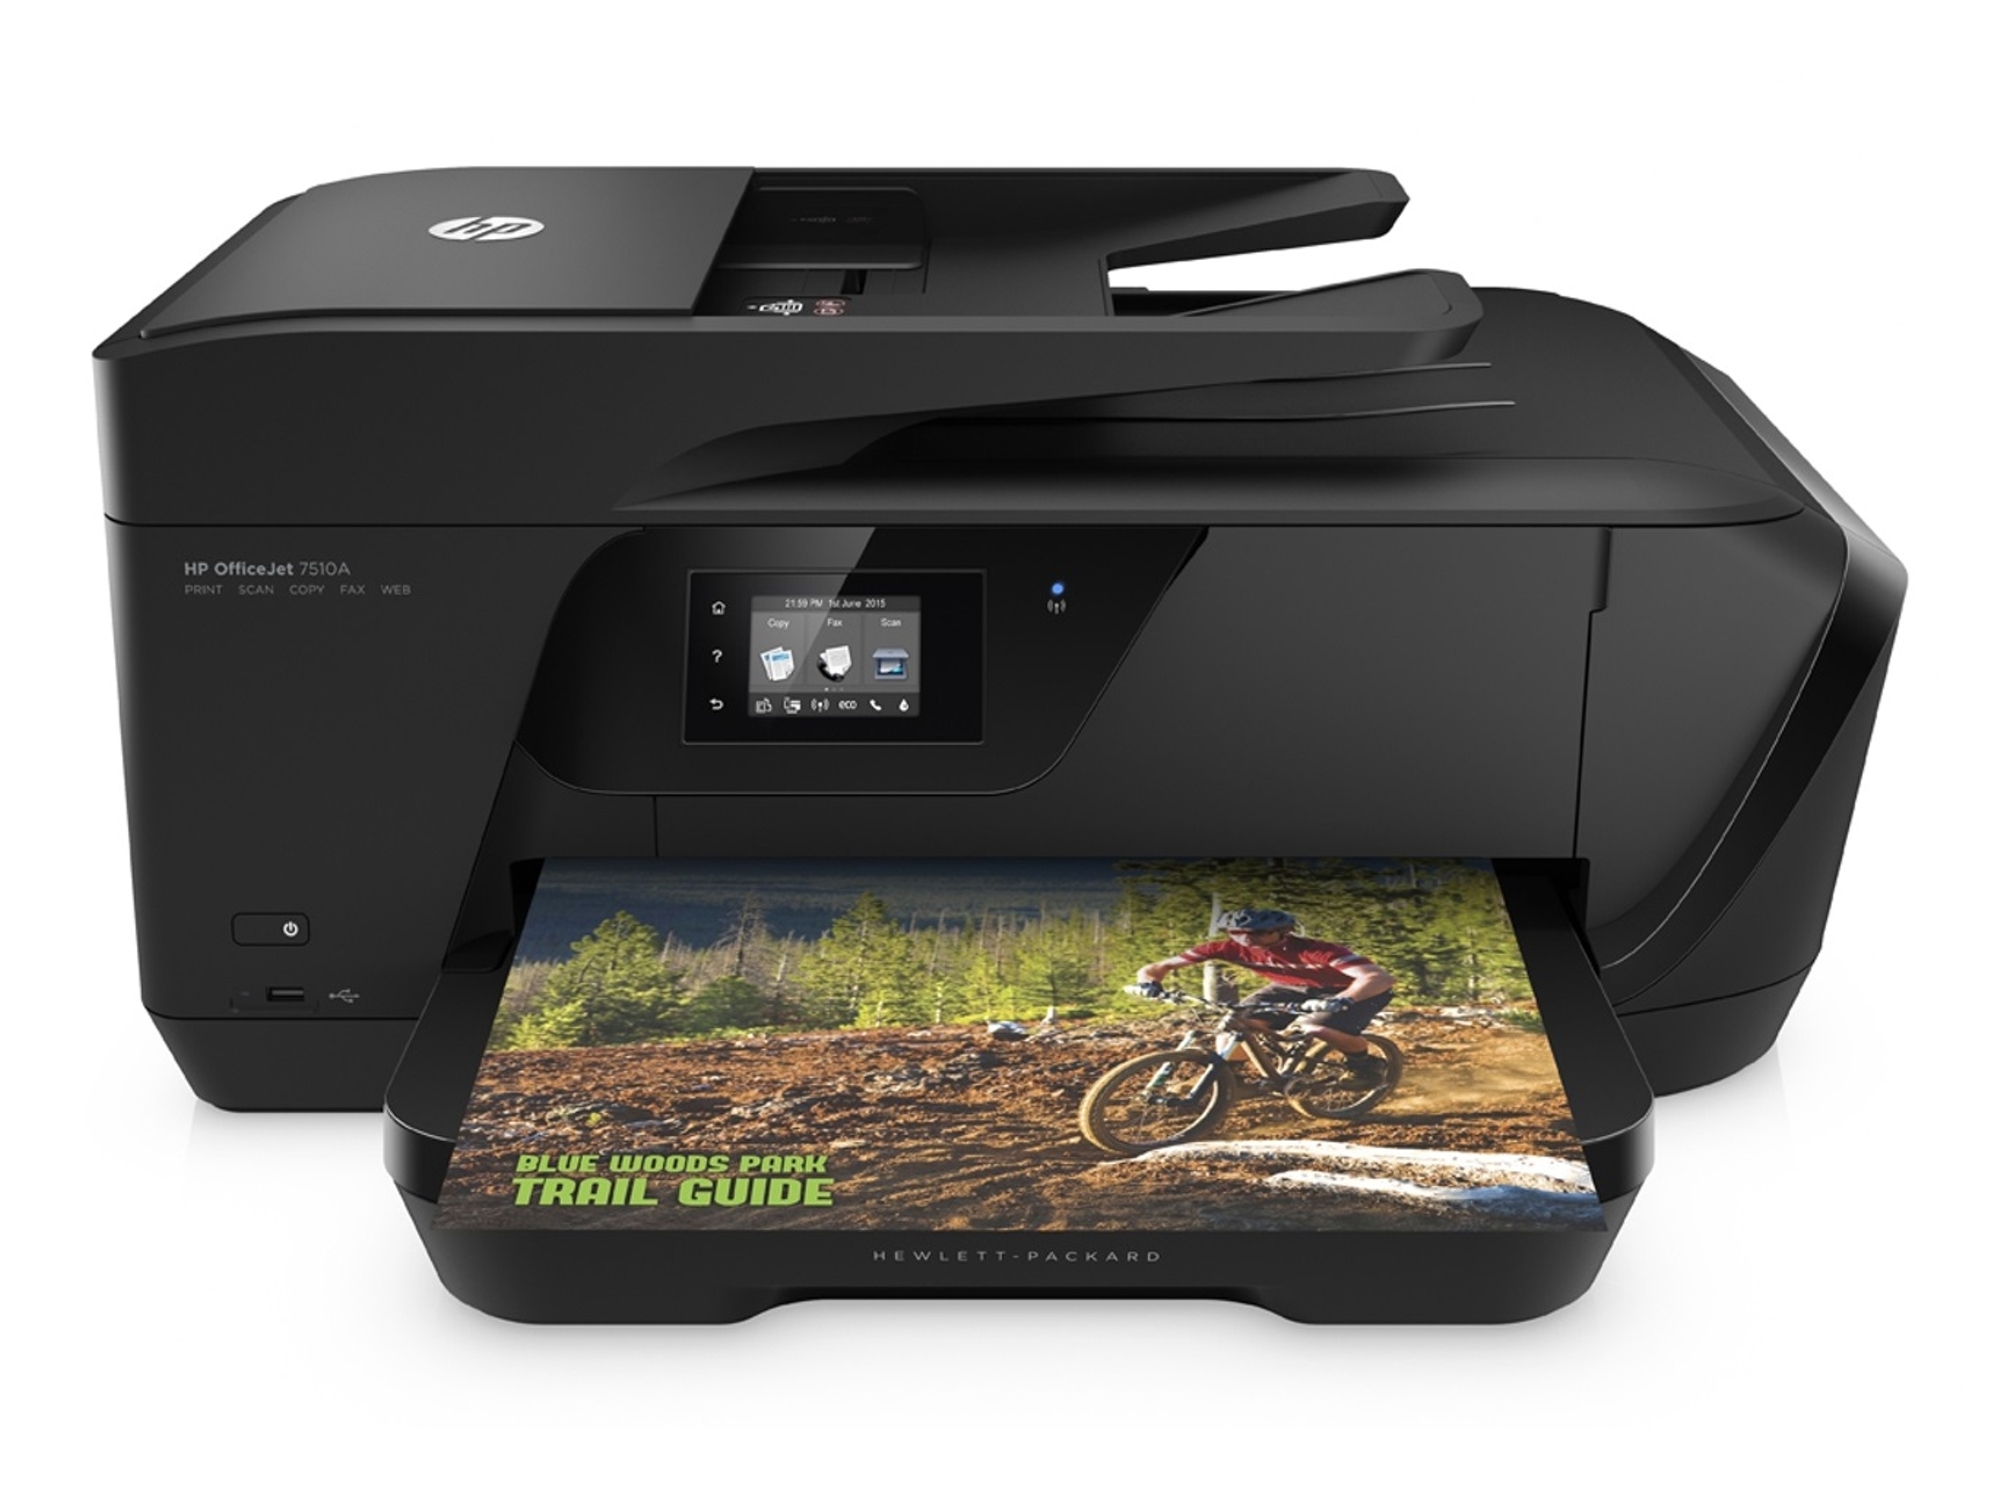 Impresora Tinta Hp officejet 7510 fax wifi imprime copia escanea color a3 7510wf wide format